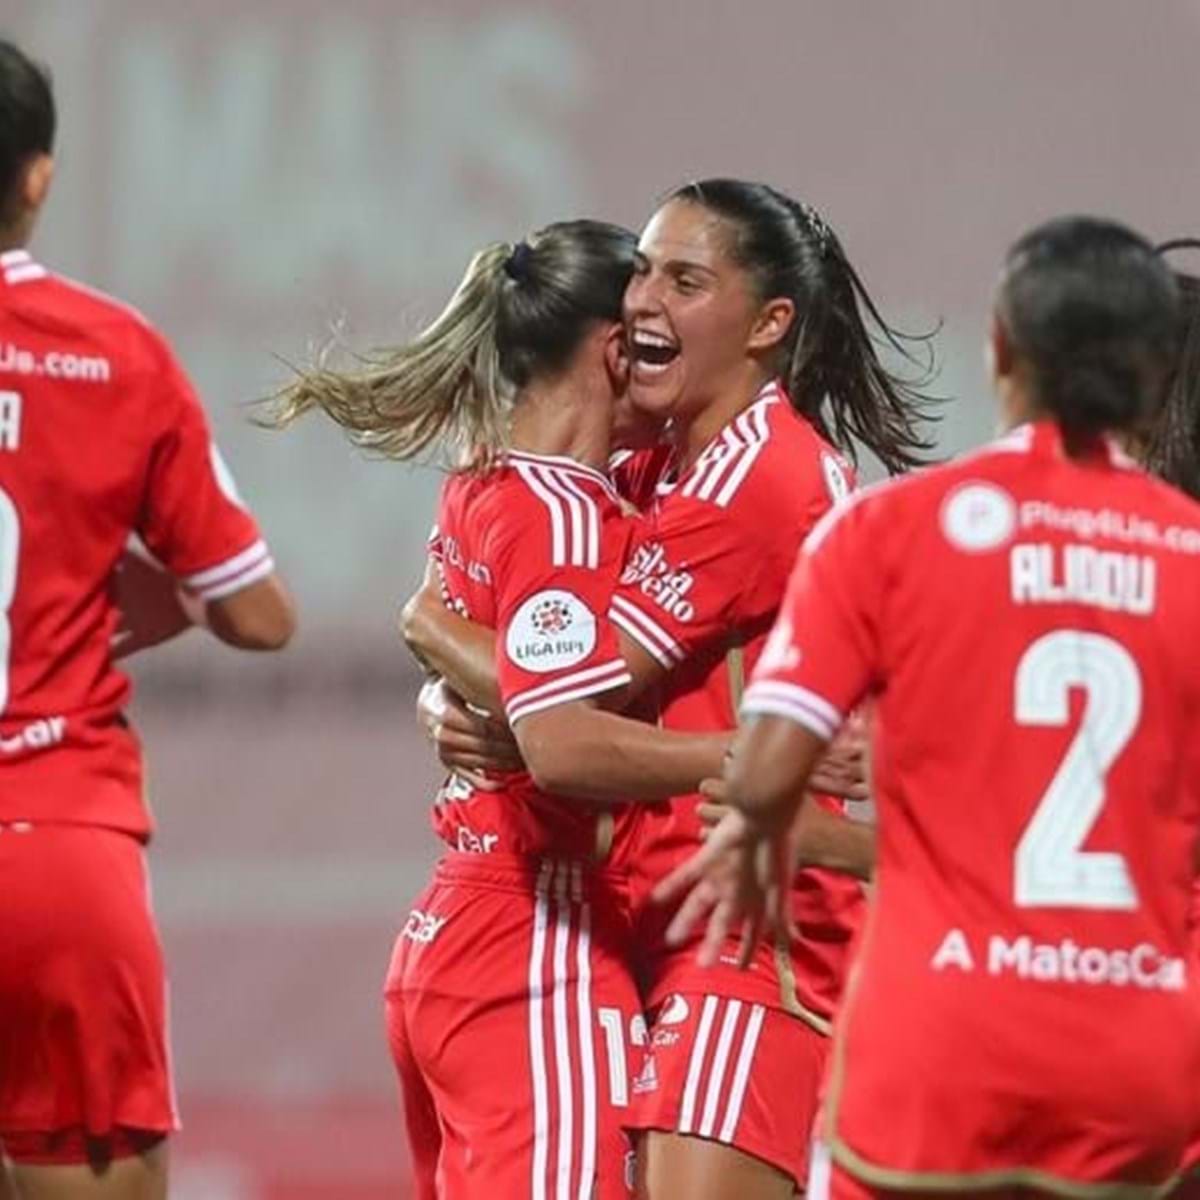 Benfica histórico sobe ao 12º lugar do ranking feminino de clubes